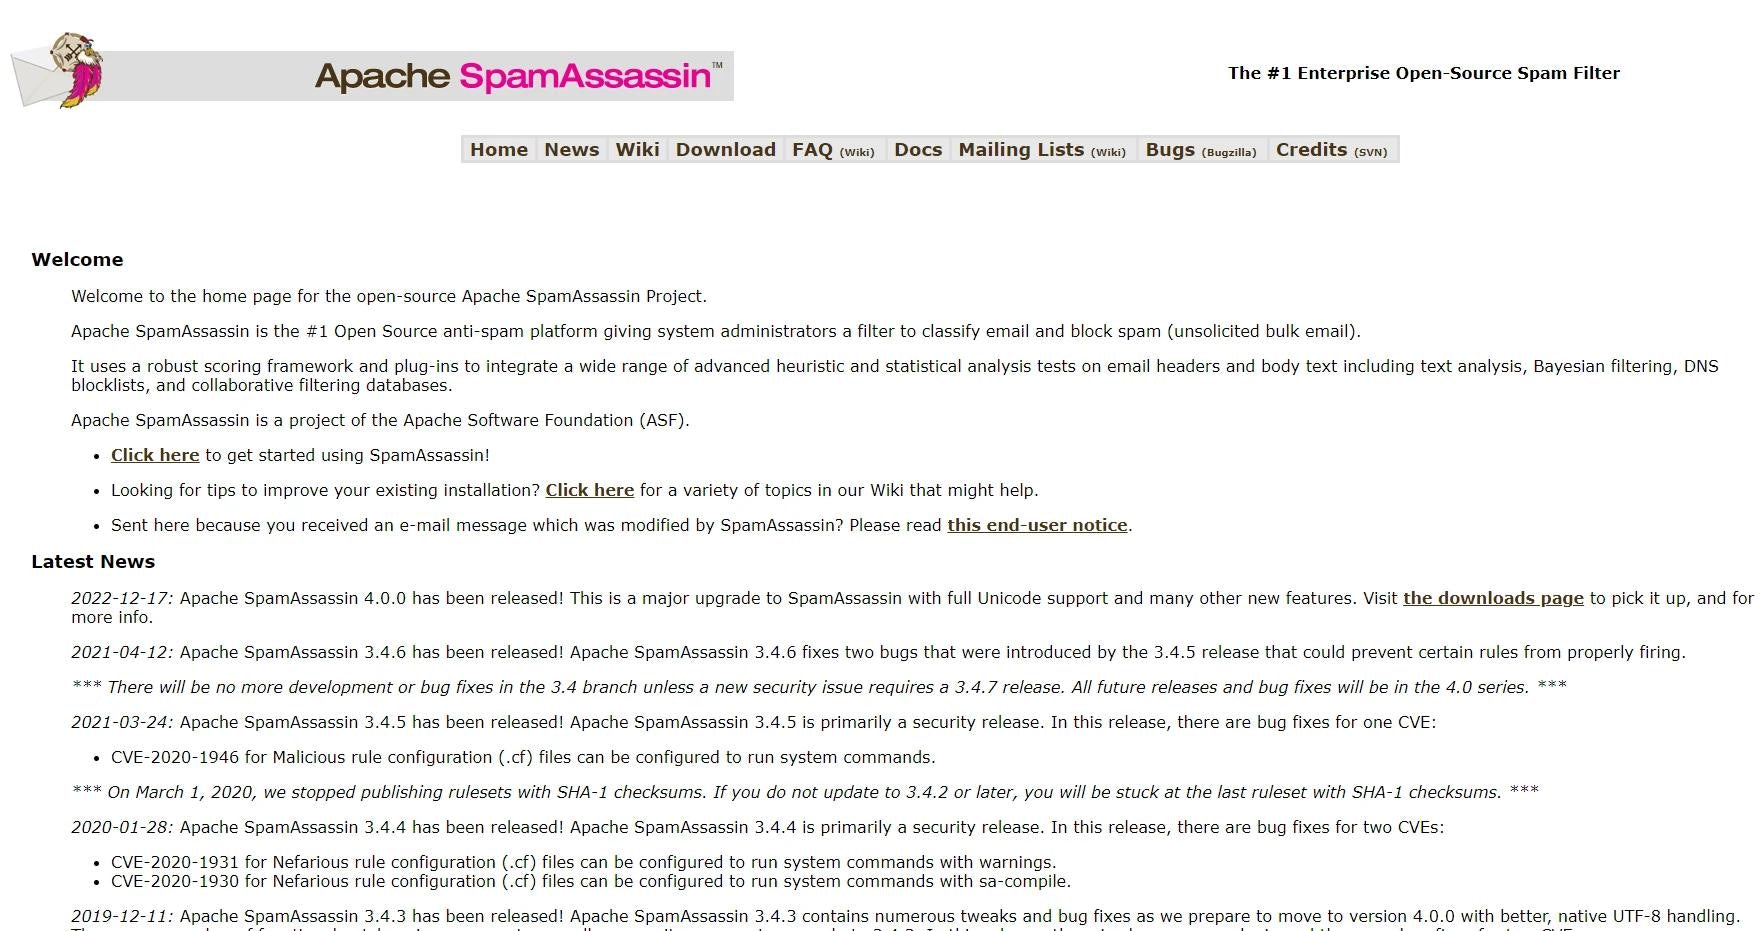 Apache SpamAssassin email marketing metrics tool